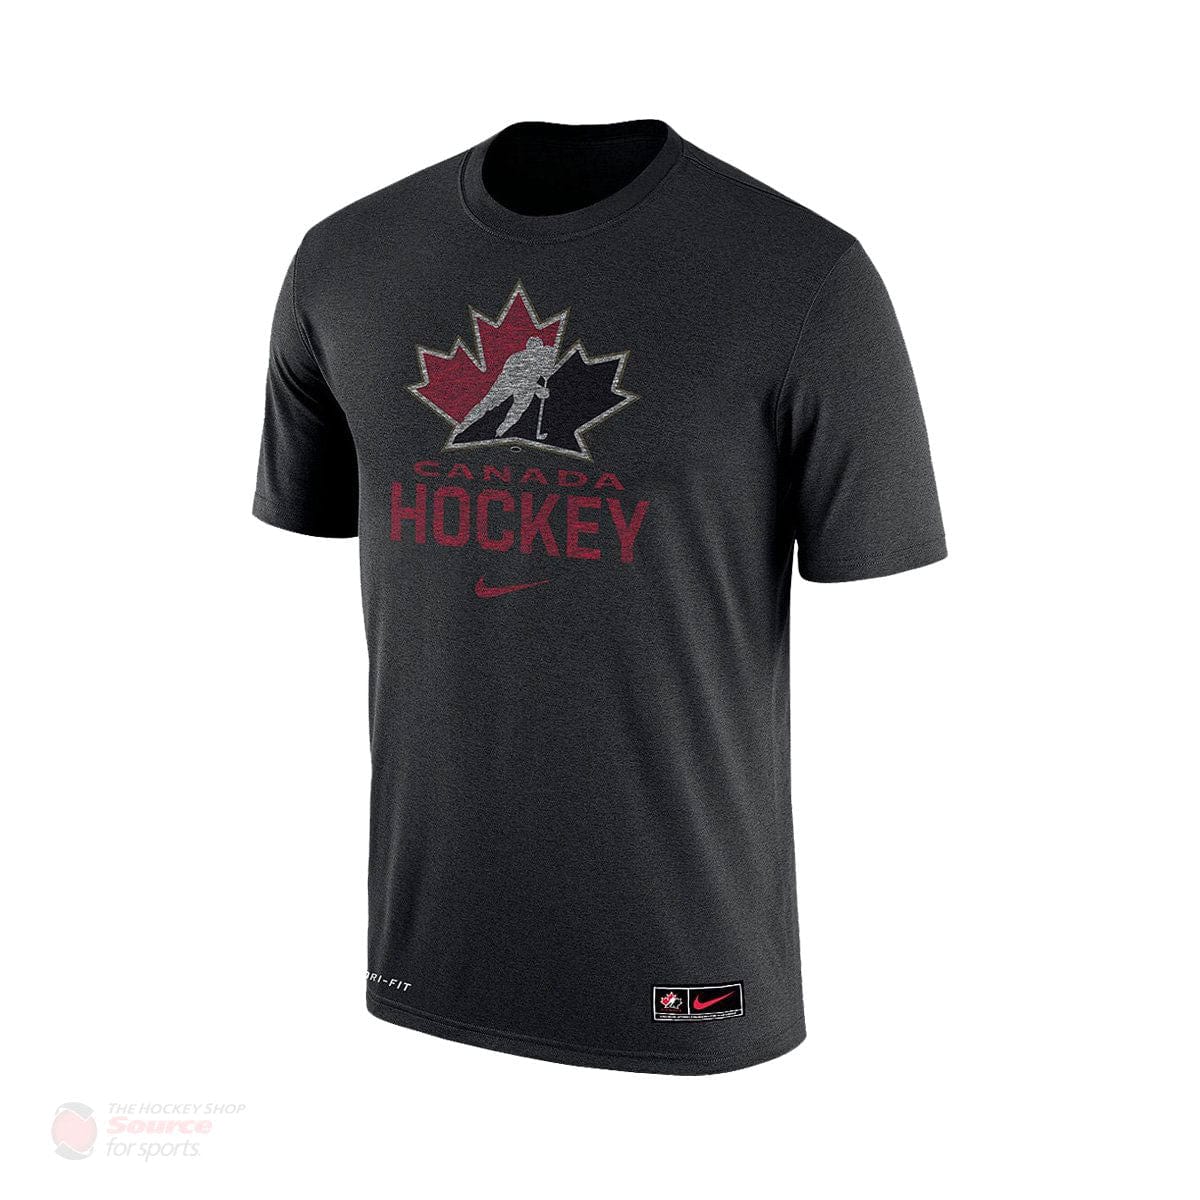 Hockey Canada Nike Dri-Fit Cotton Mens Shirt